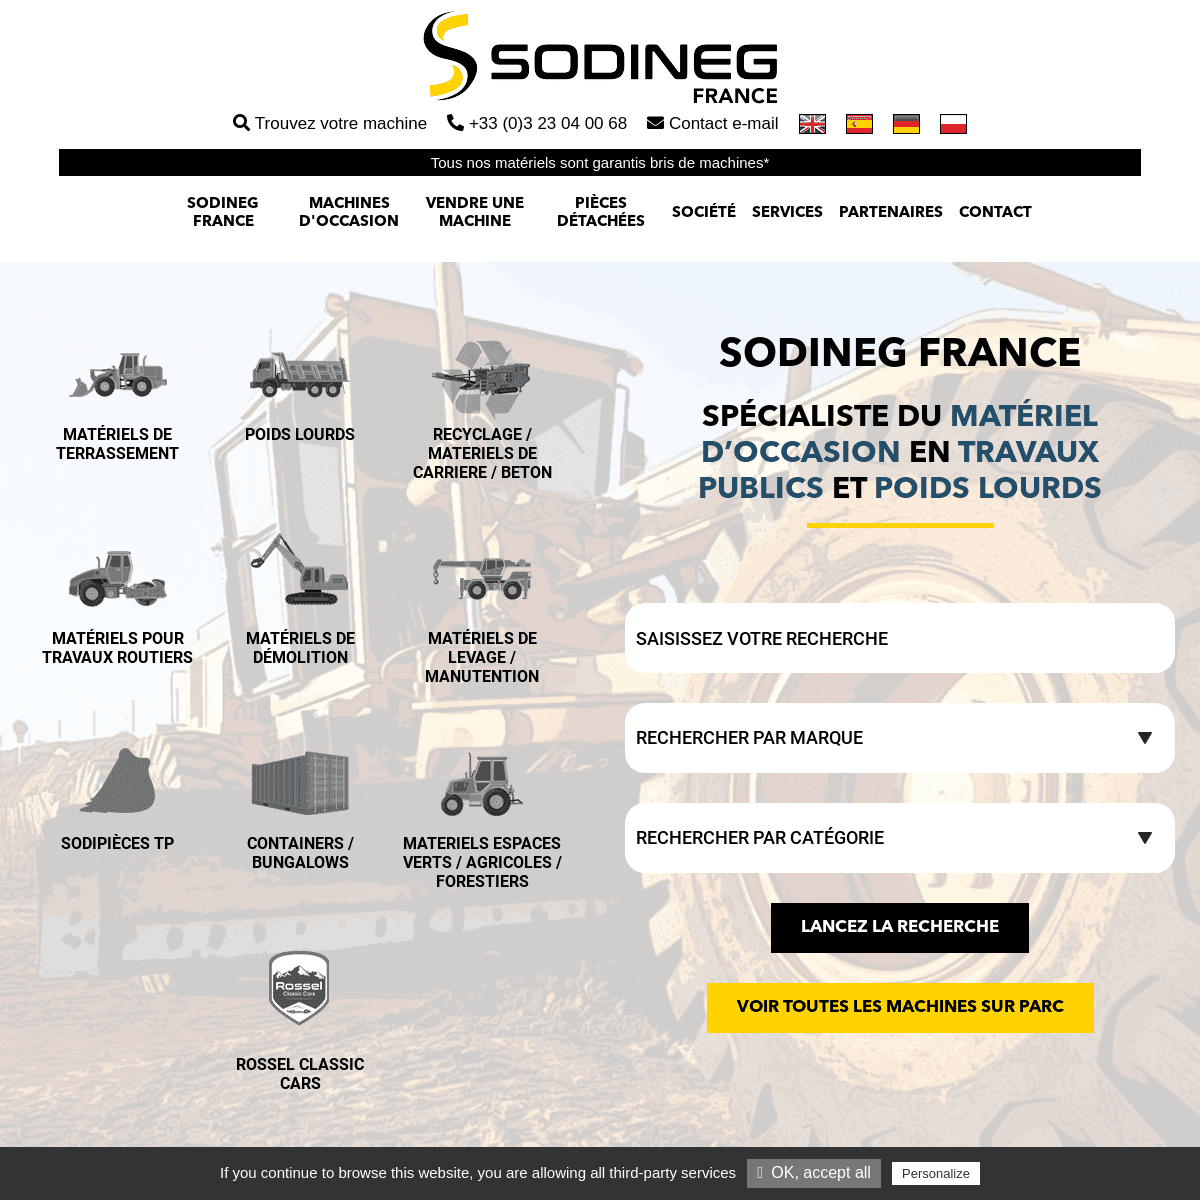 A complete backup of sodineg.com